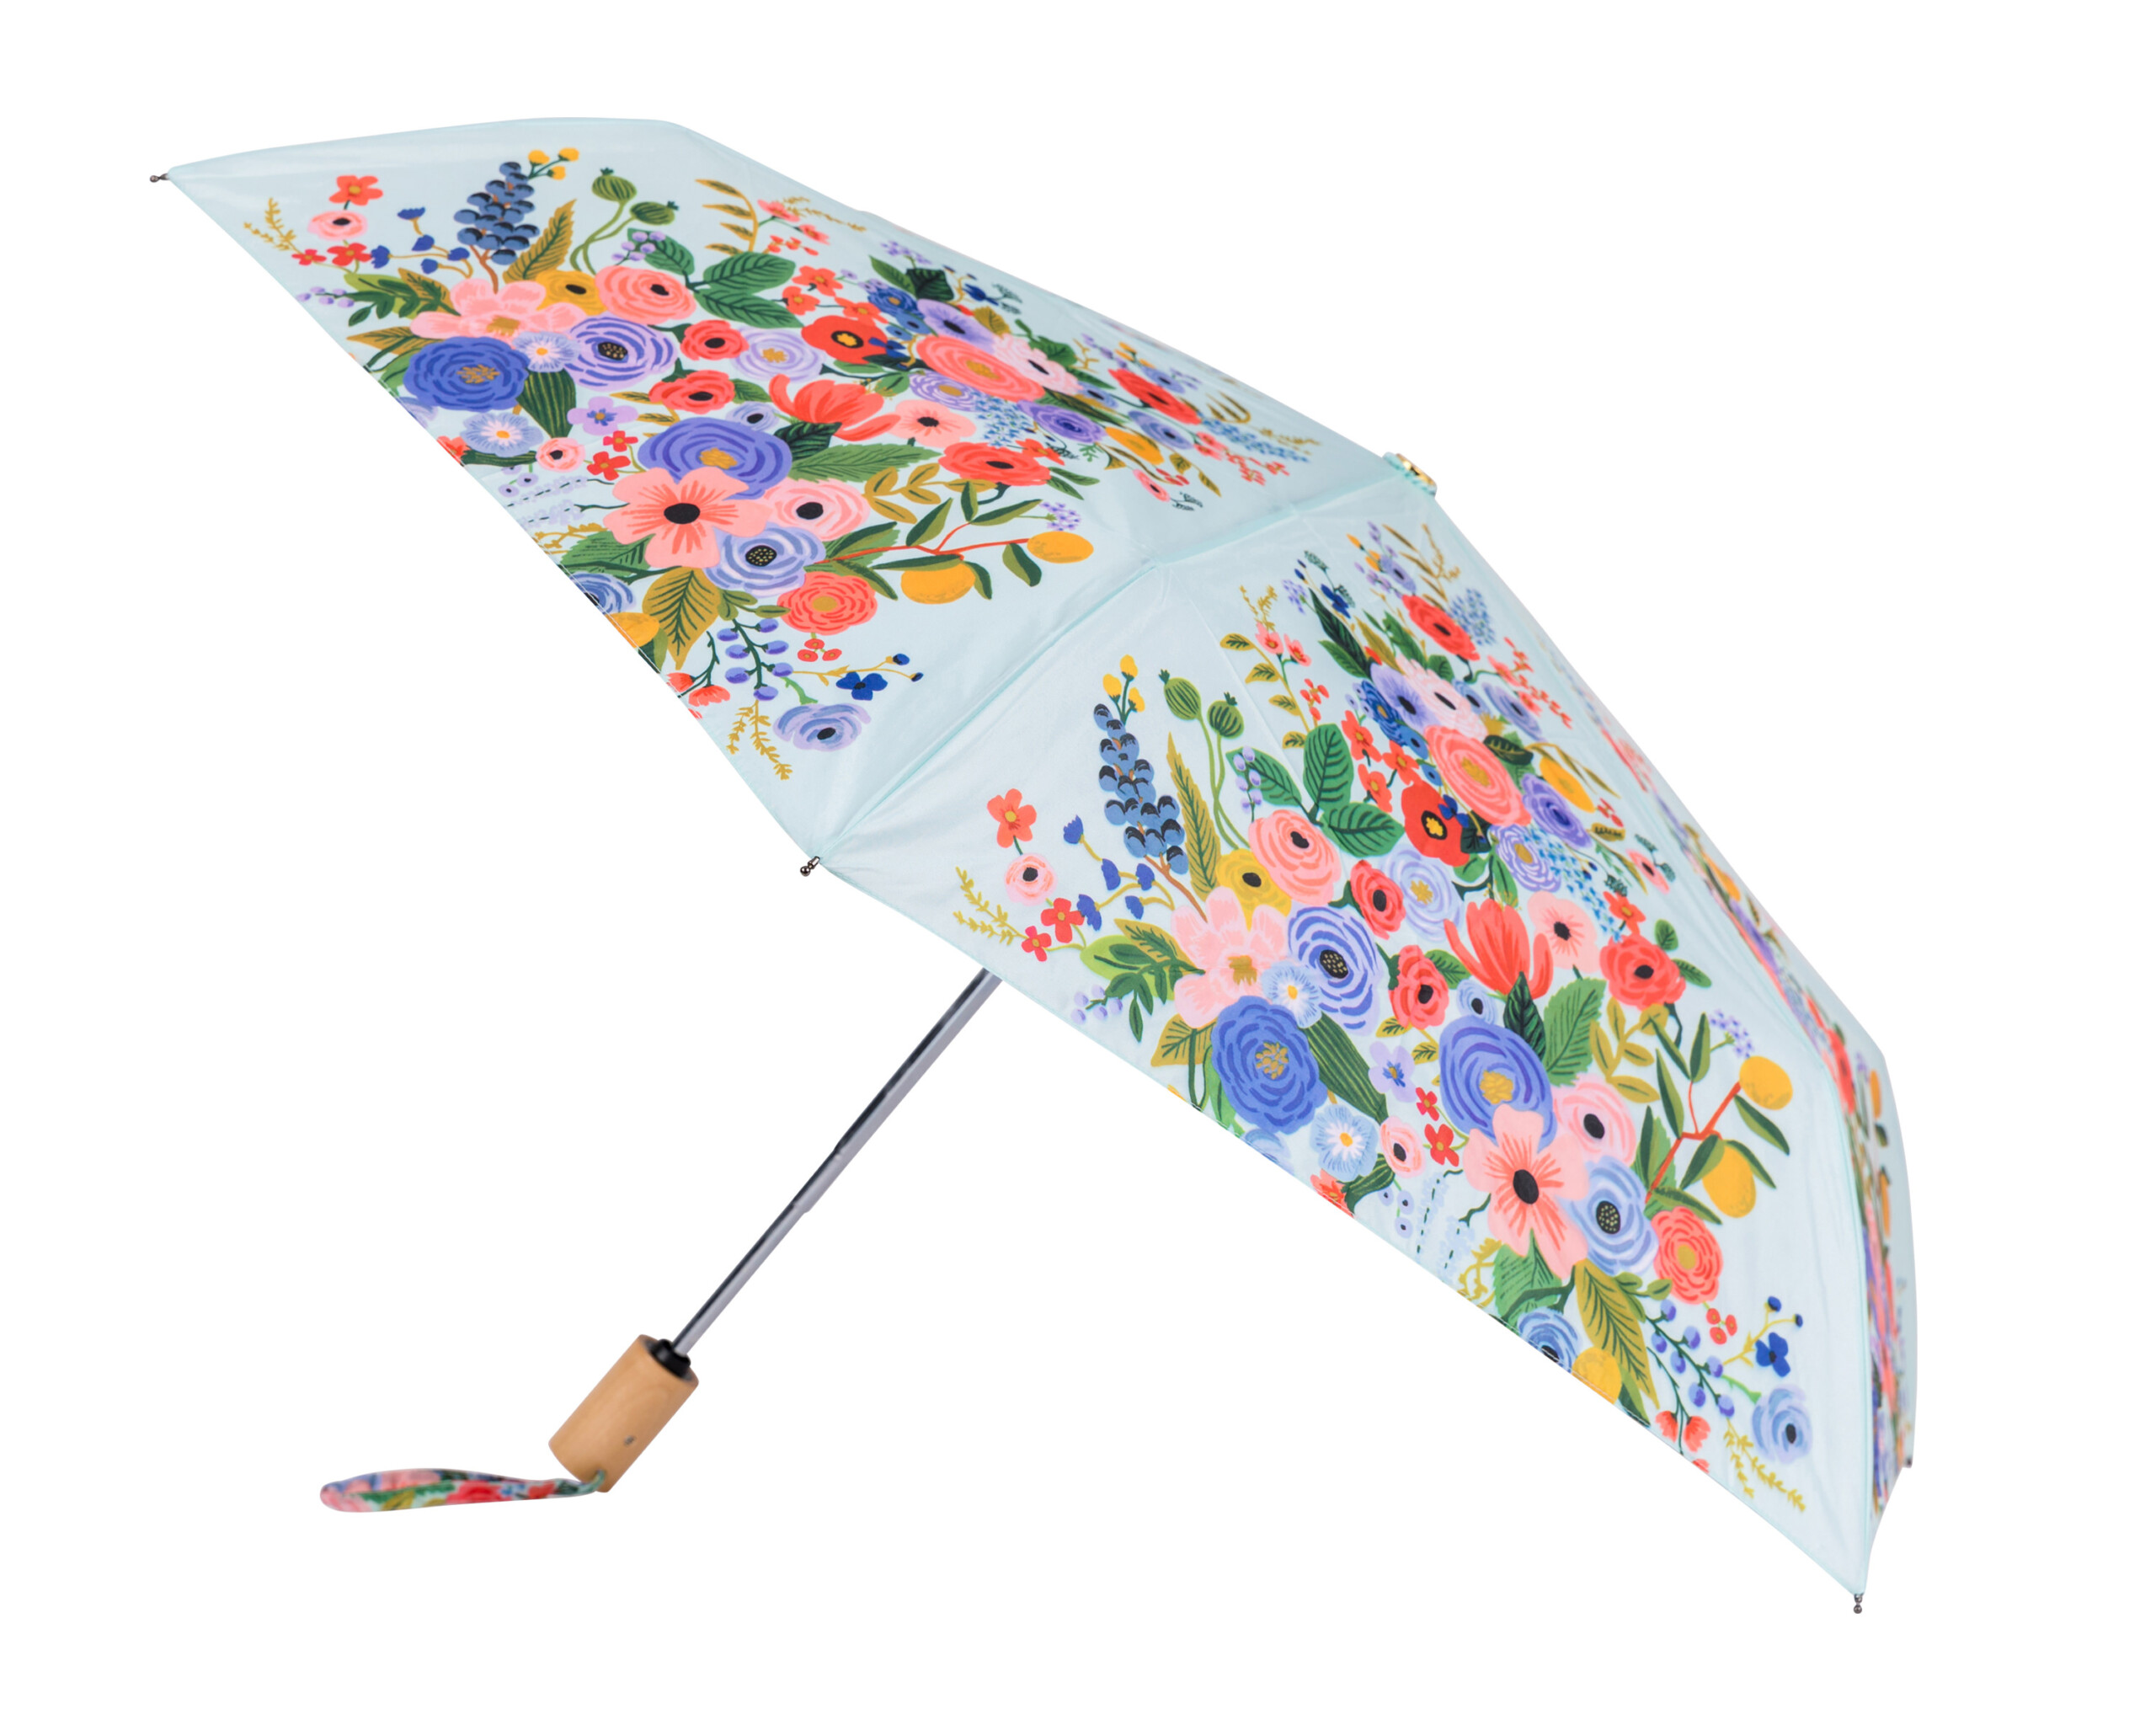 Umbrella Product Photography